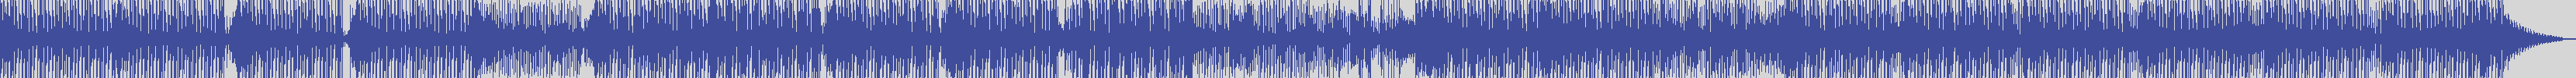 atomic_recordings [AR013] Gambol J - Balearia [Original Mix] audio wave form